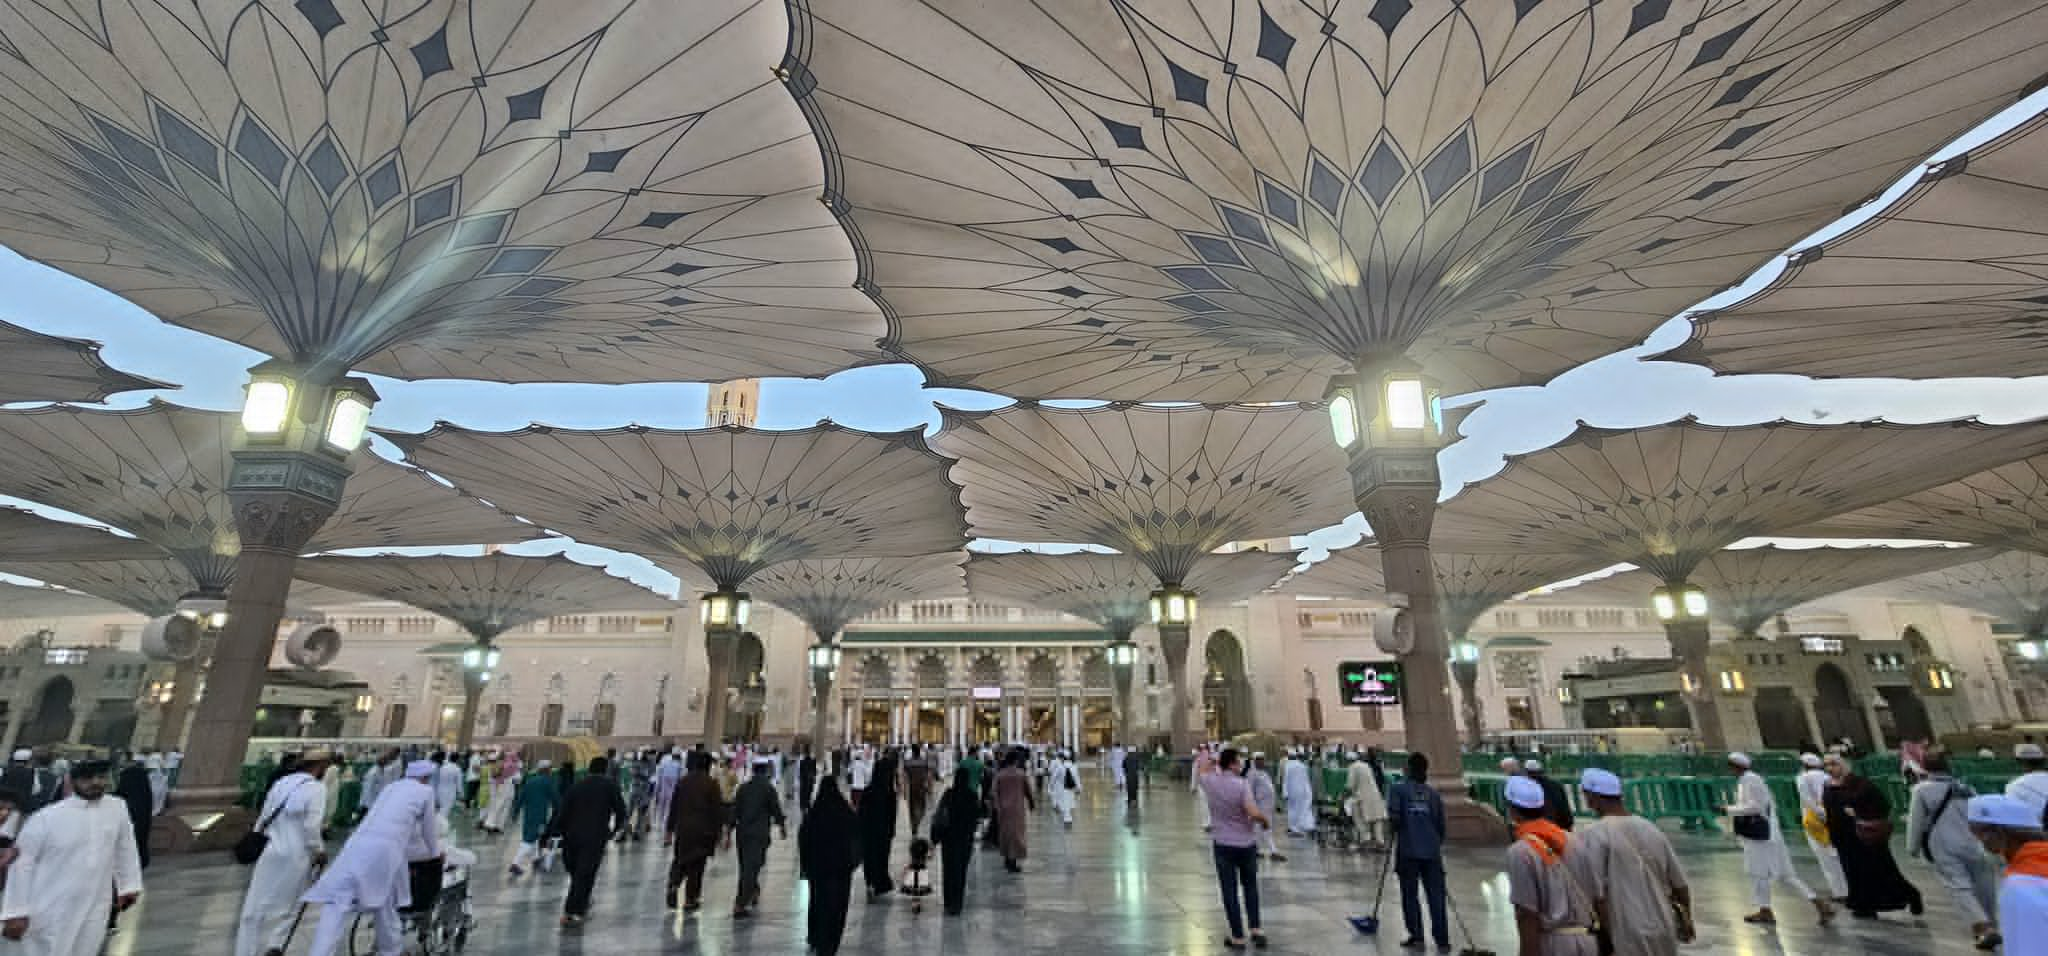 mesmerising images of masjid al nabi